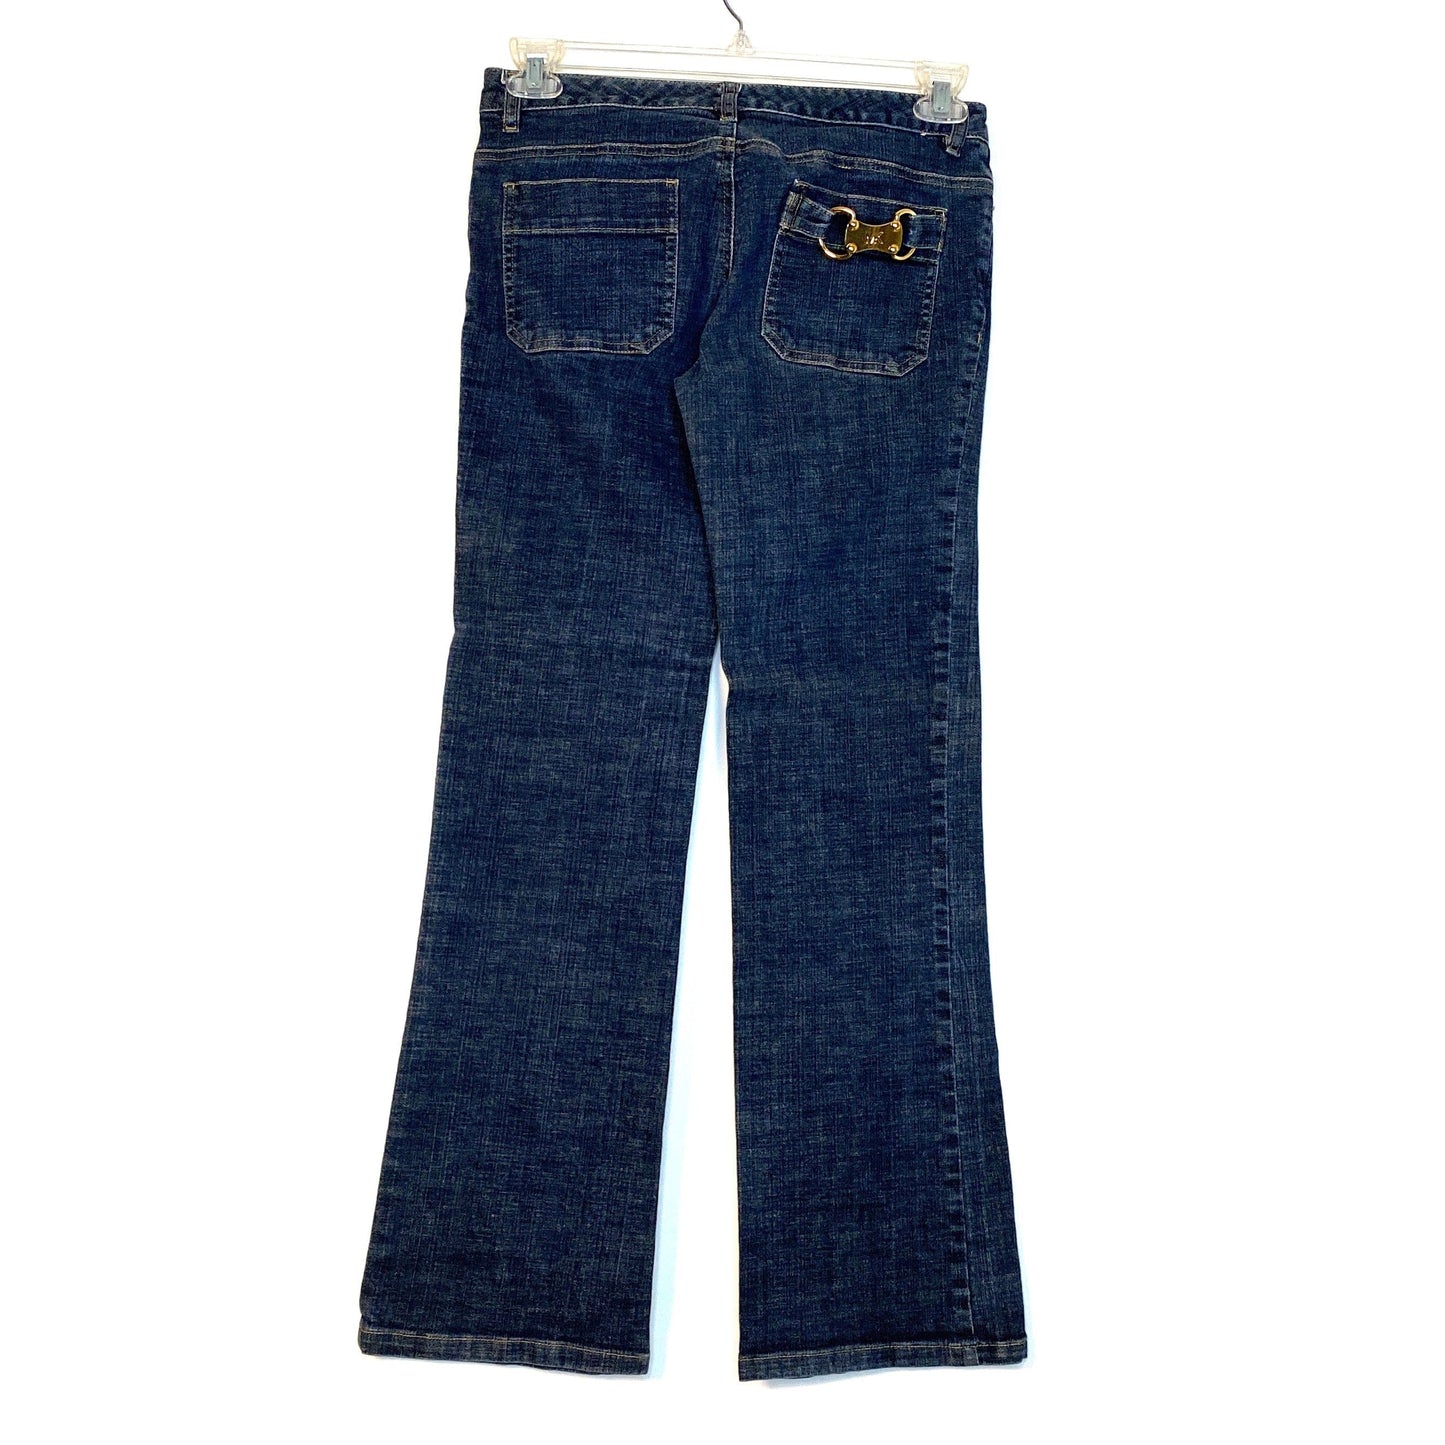 Michael Kors Womens Size 4 Straight Denim Blue Jeans Gold Horsebit on Pockets